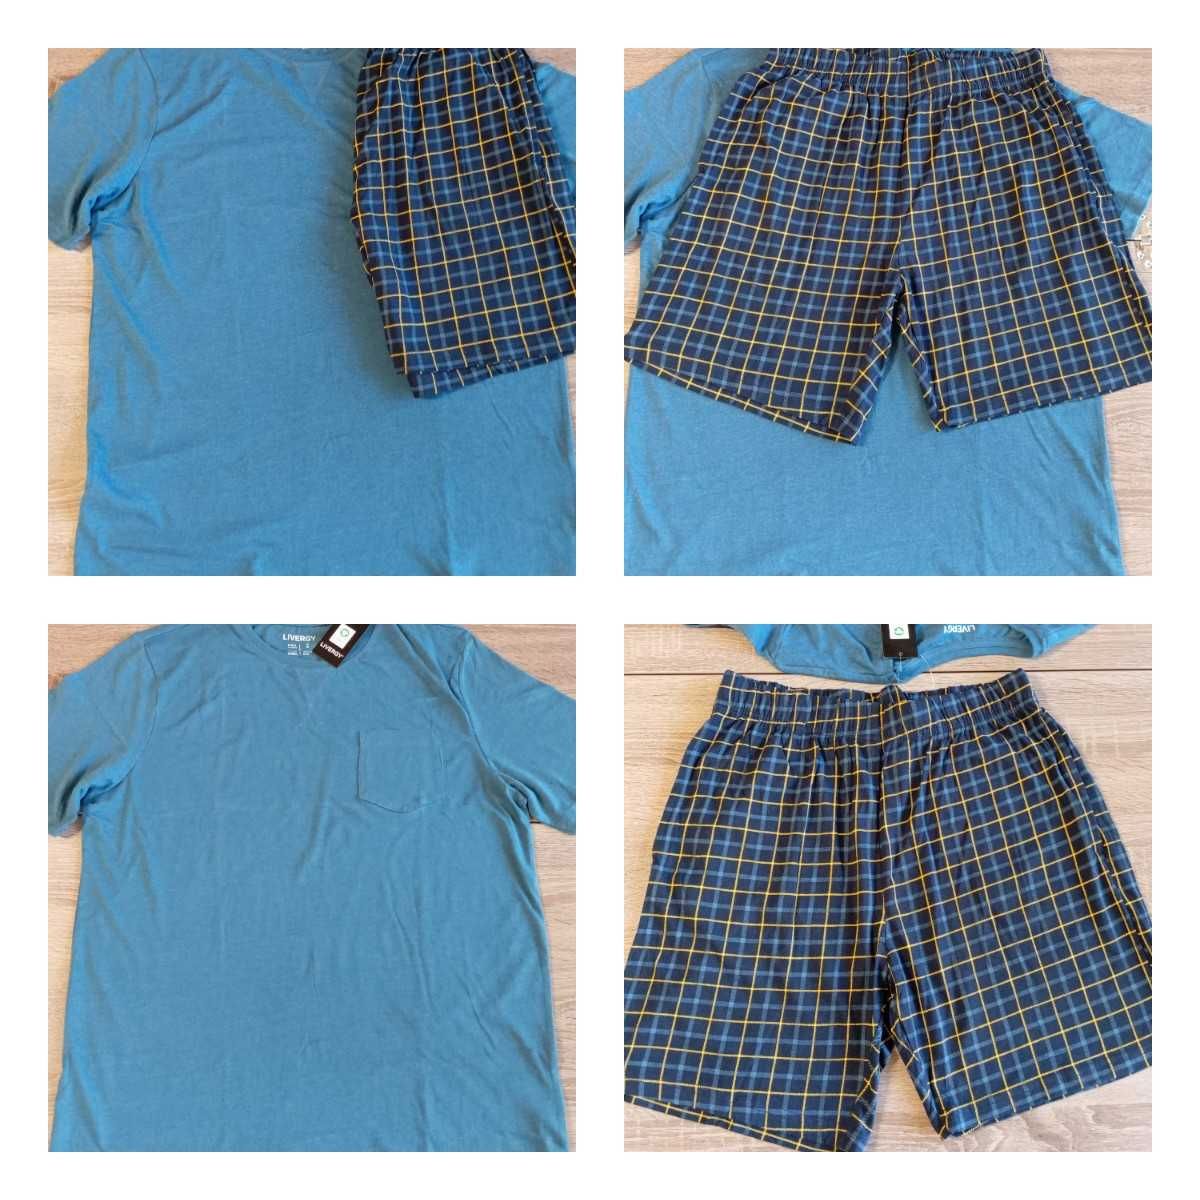 Мужская пижама Livergy р. S, M, L, XL шорты футболка, домашний костюм